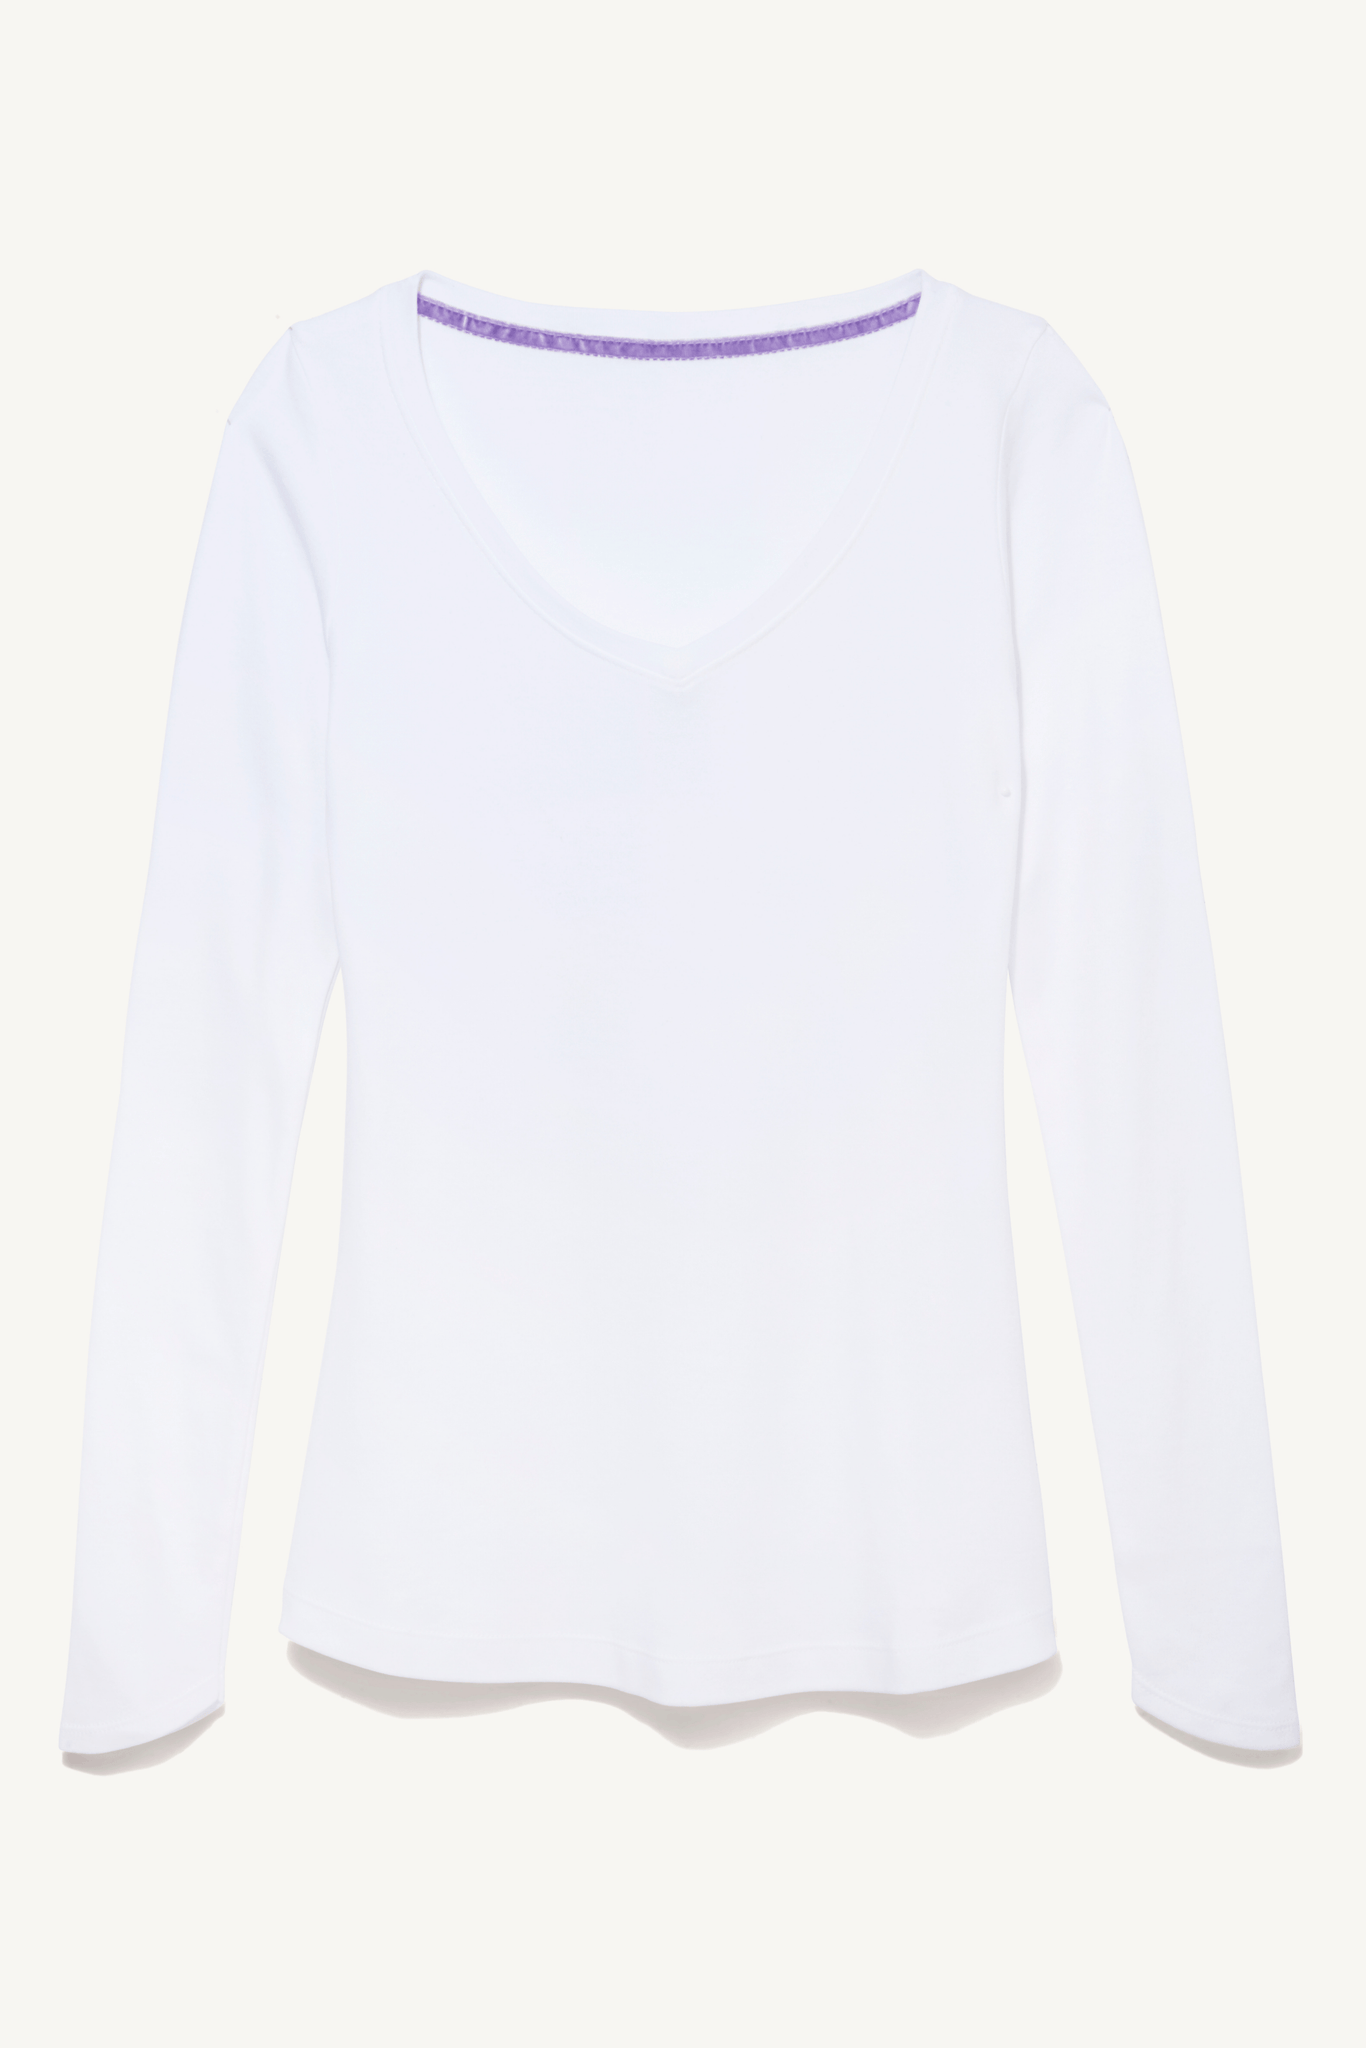 Women's High Quality Long Sleeve V-Neck T-Shirt - Comfortable V-Neck T-Shirt - Flattering Long Sleeve T-Shirt - Soft White Long Sleeve V-Neck by Lavender Hill Clothing